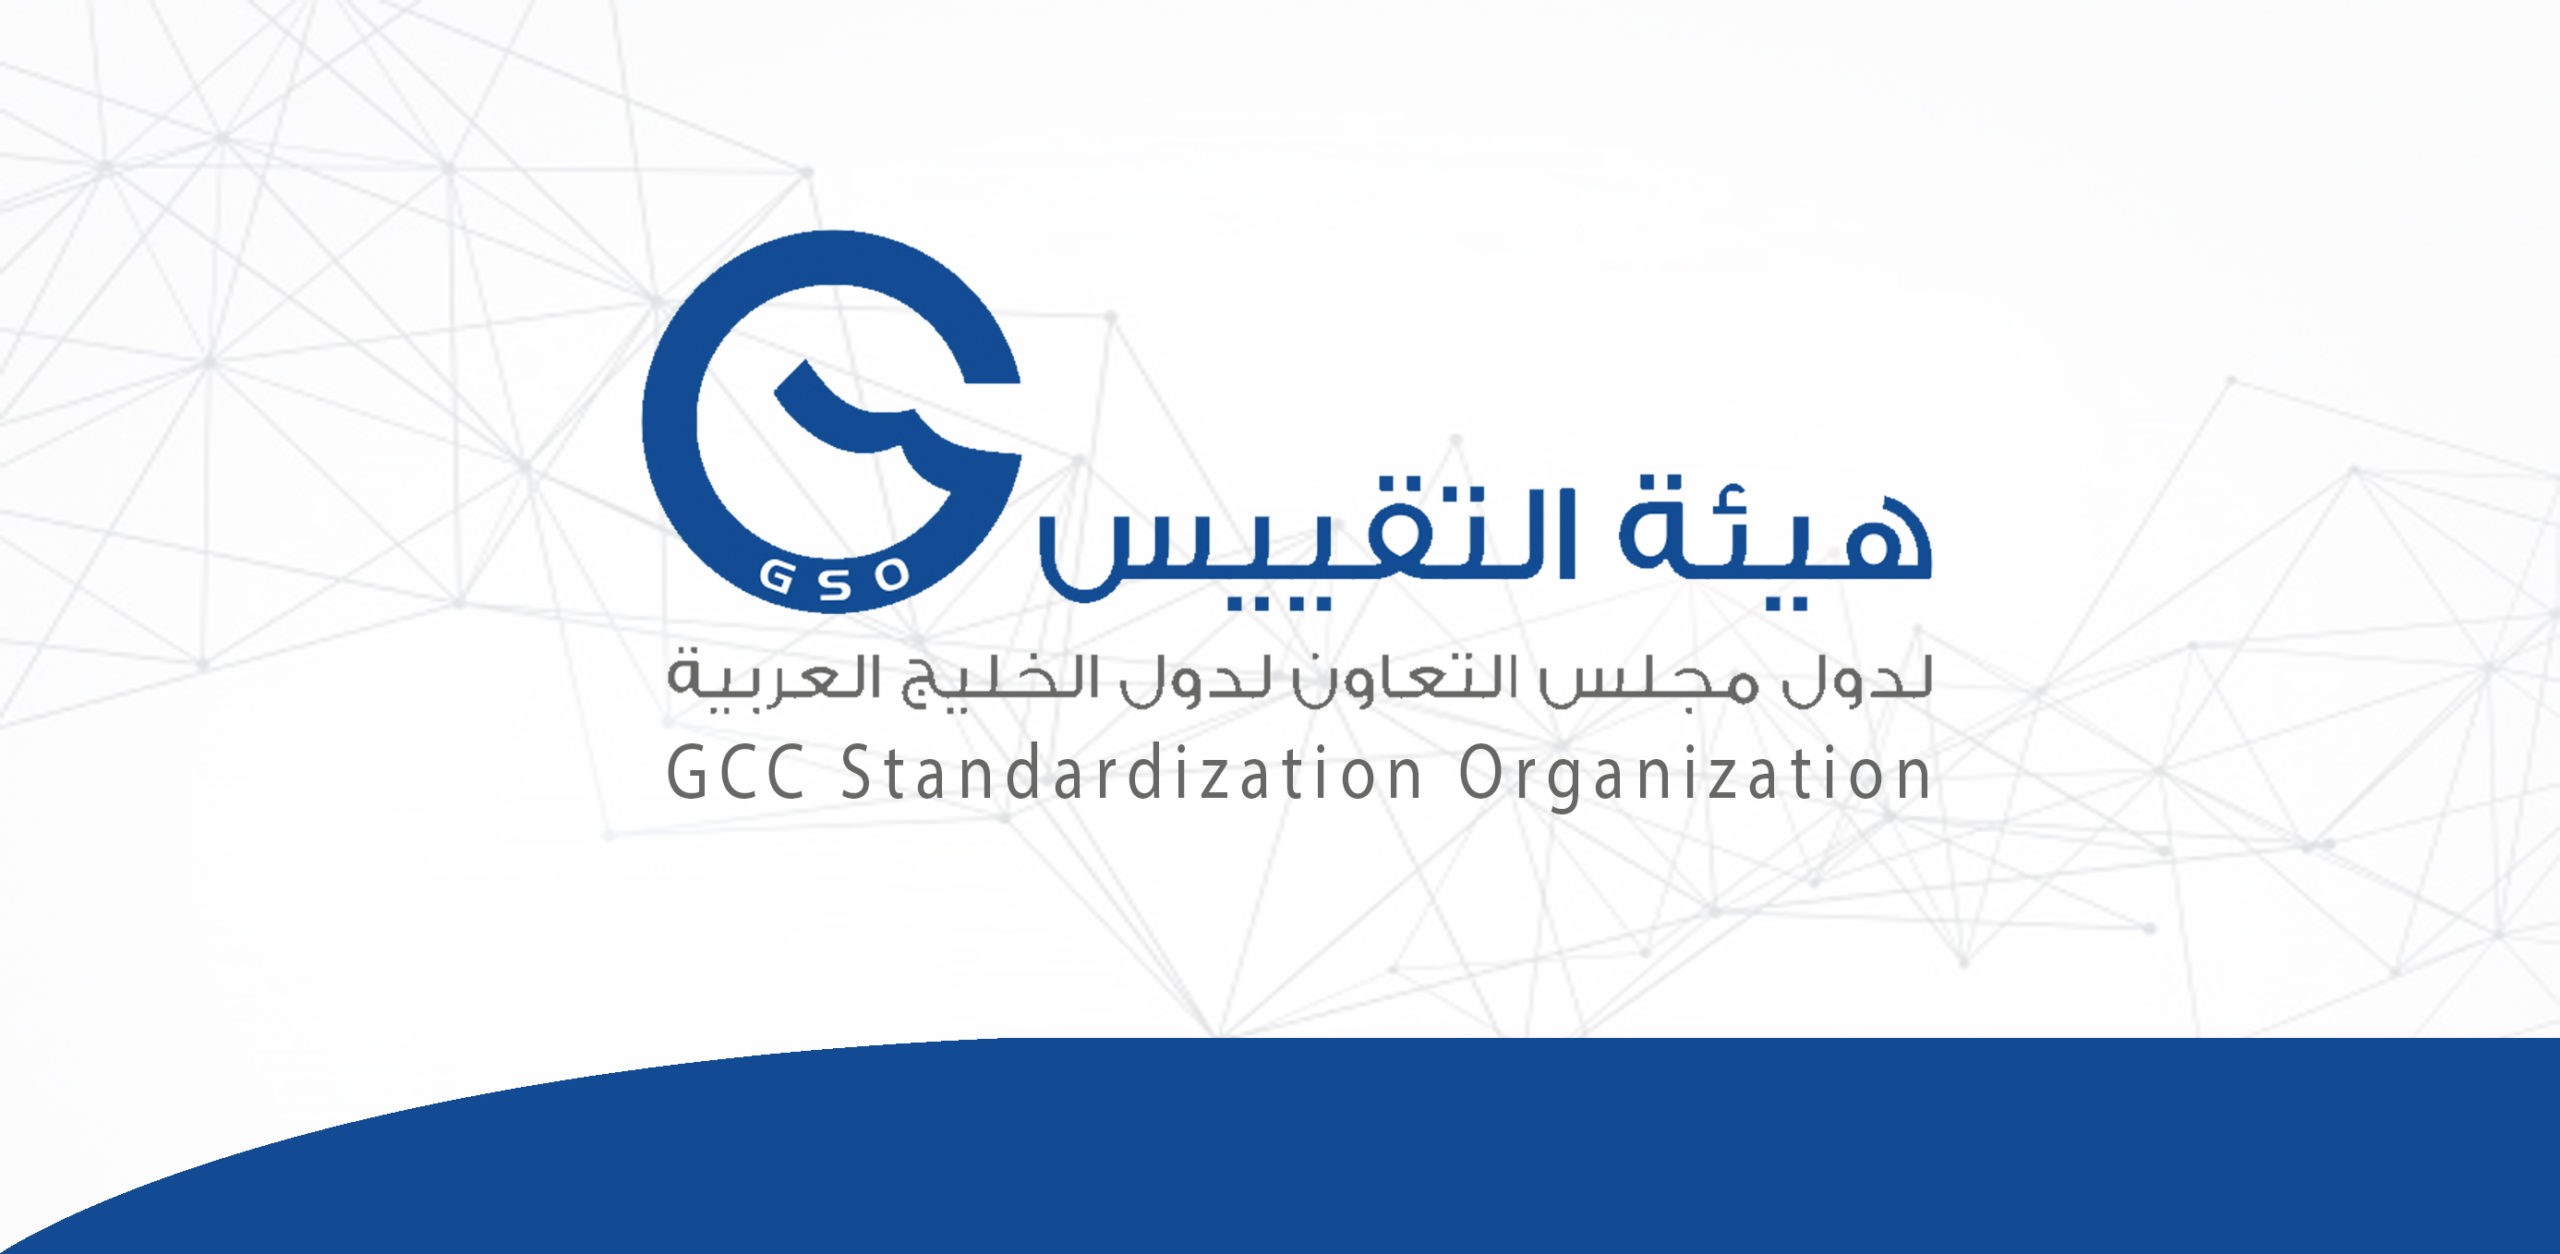 What Is the GCC Standardization Organization (GSO)?